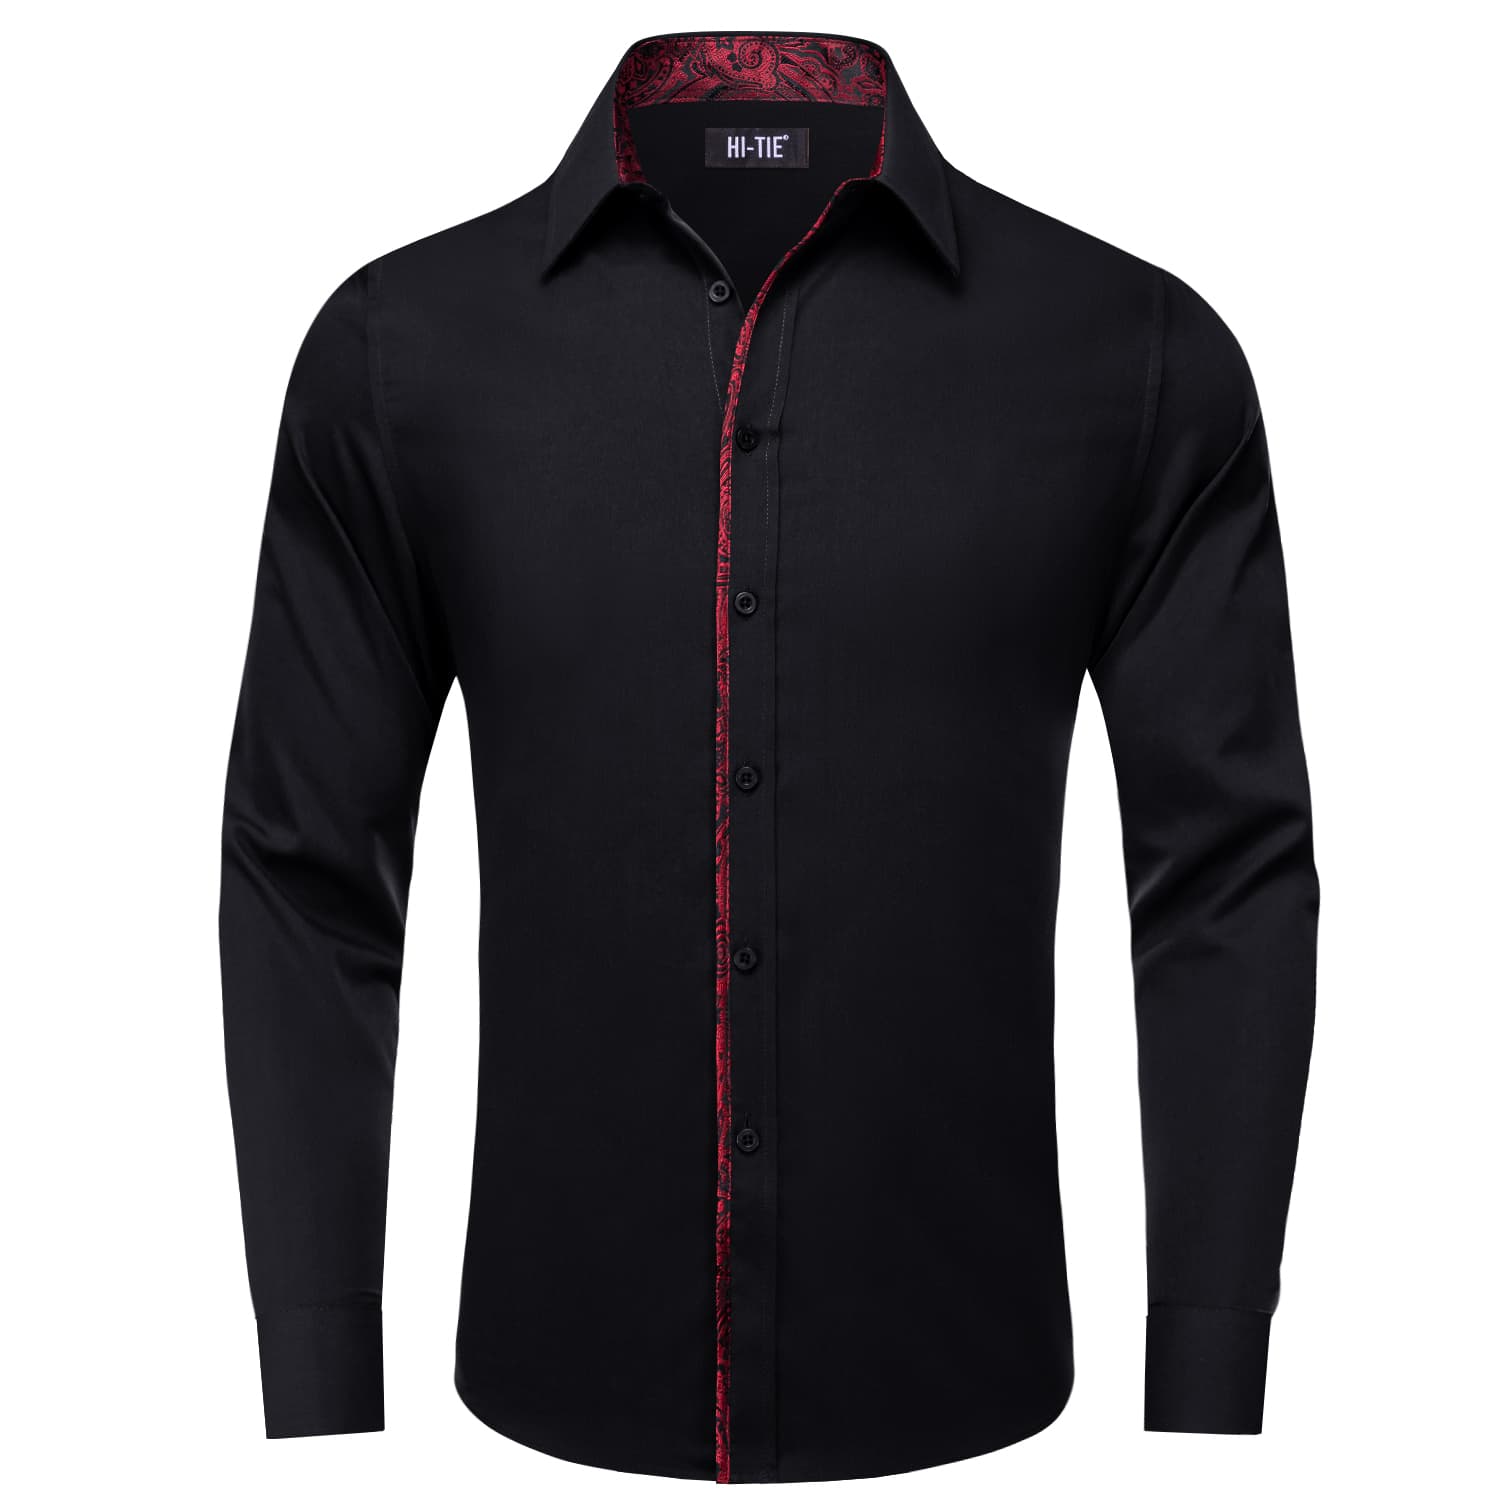 Hi-Tie Black Shirt with DarkRed Jacquard Collar Solid Shirt